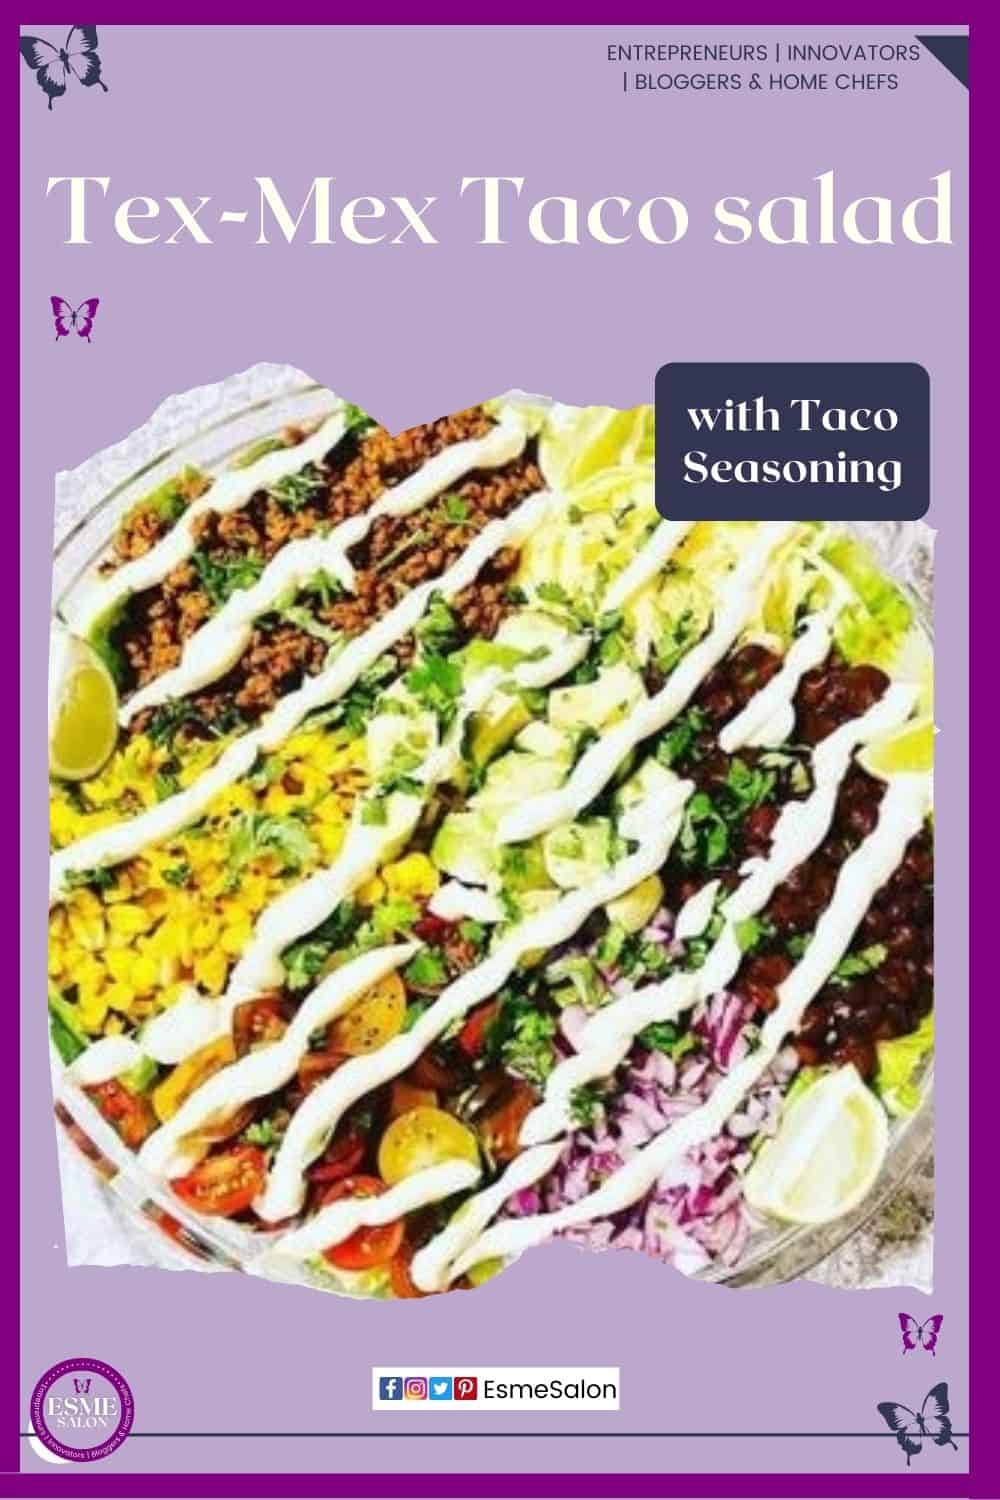 an image of a Tex-Mex Taco Salad with Taco Seasoning